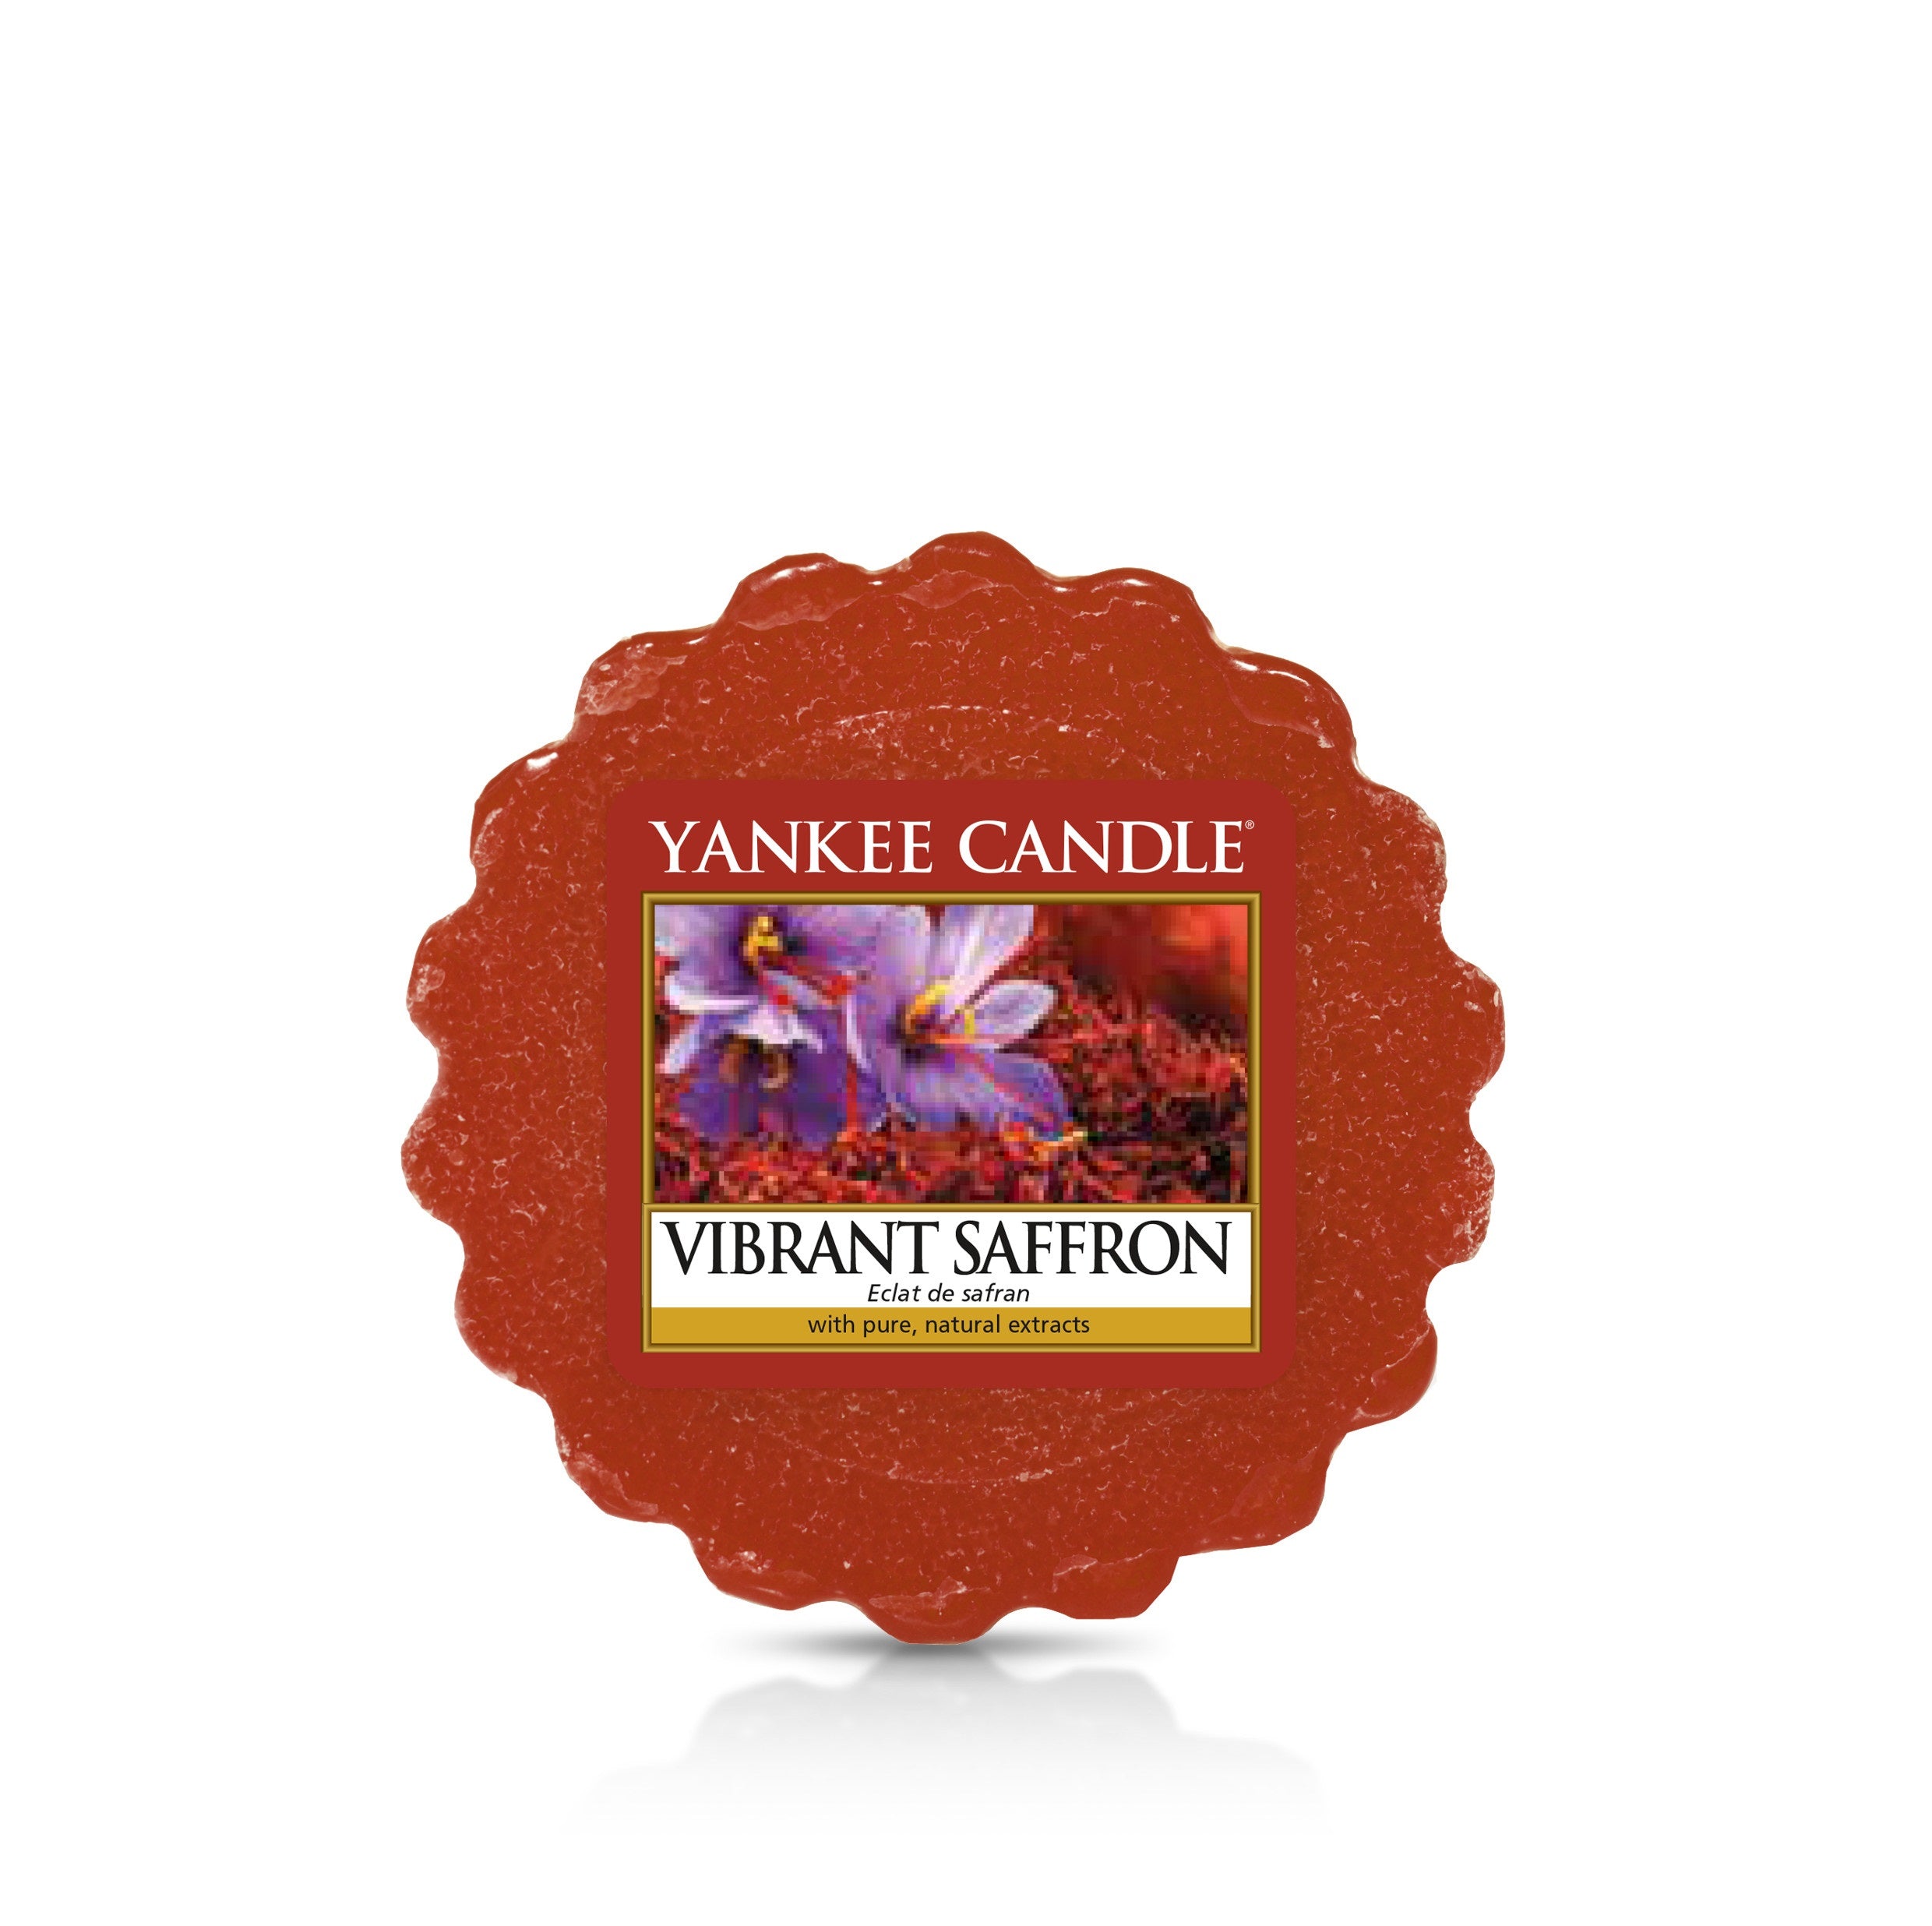 VIBRANT SAFFRON -Yankee Candle- Tart